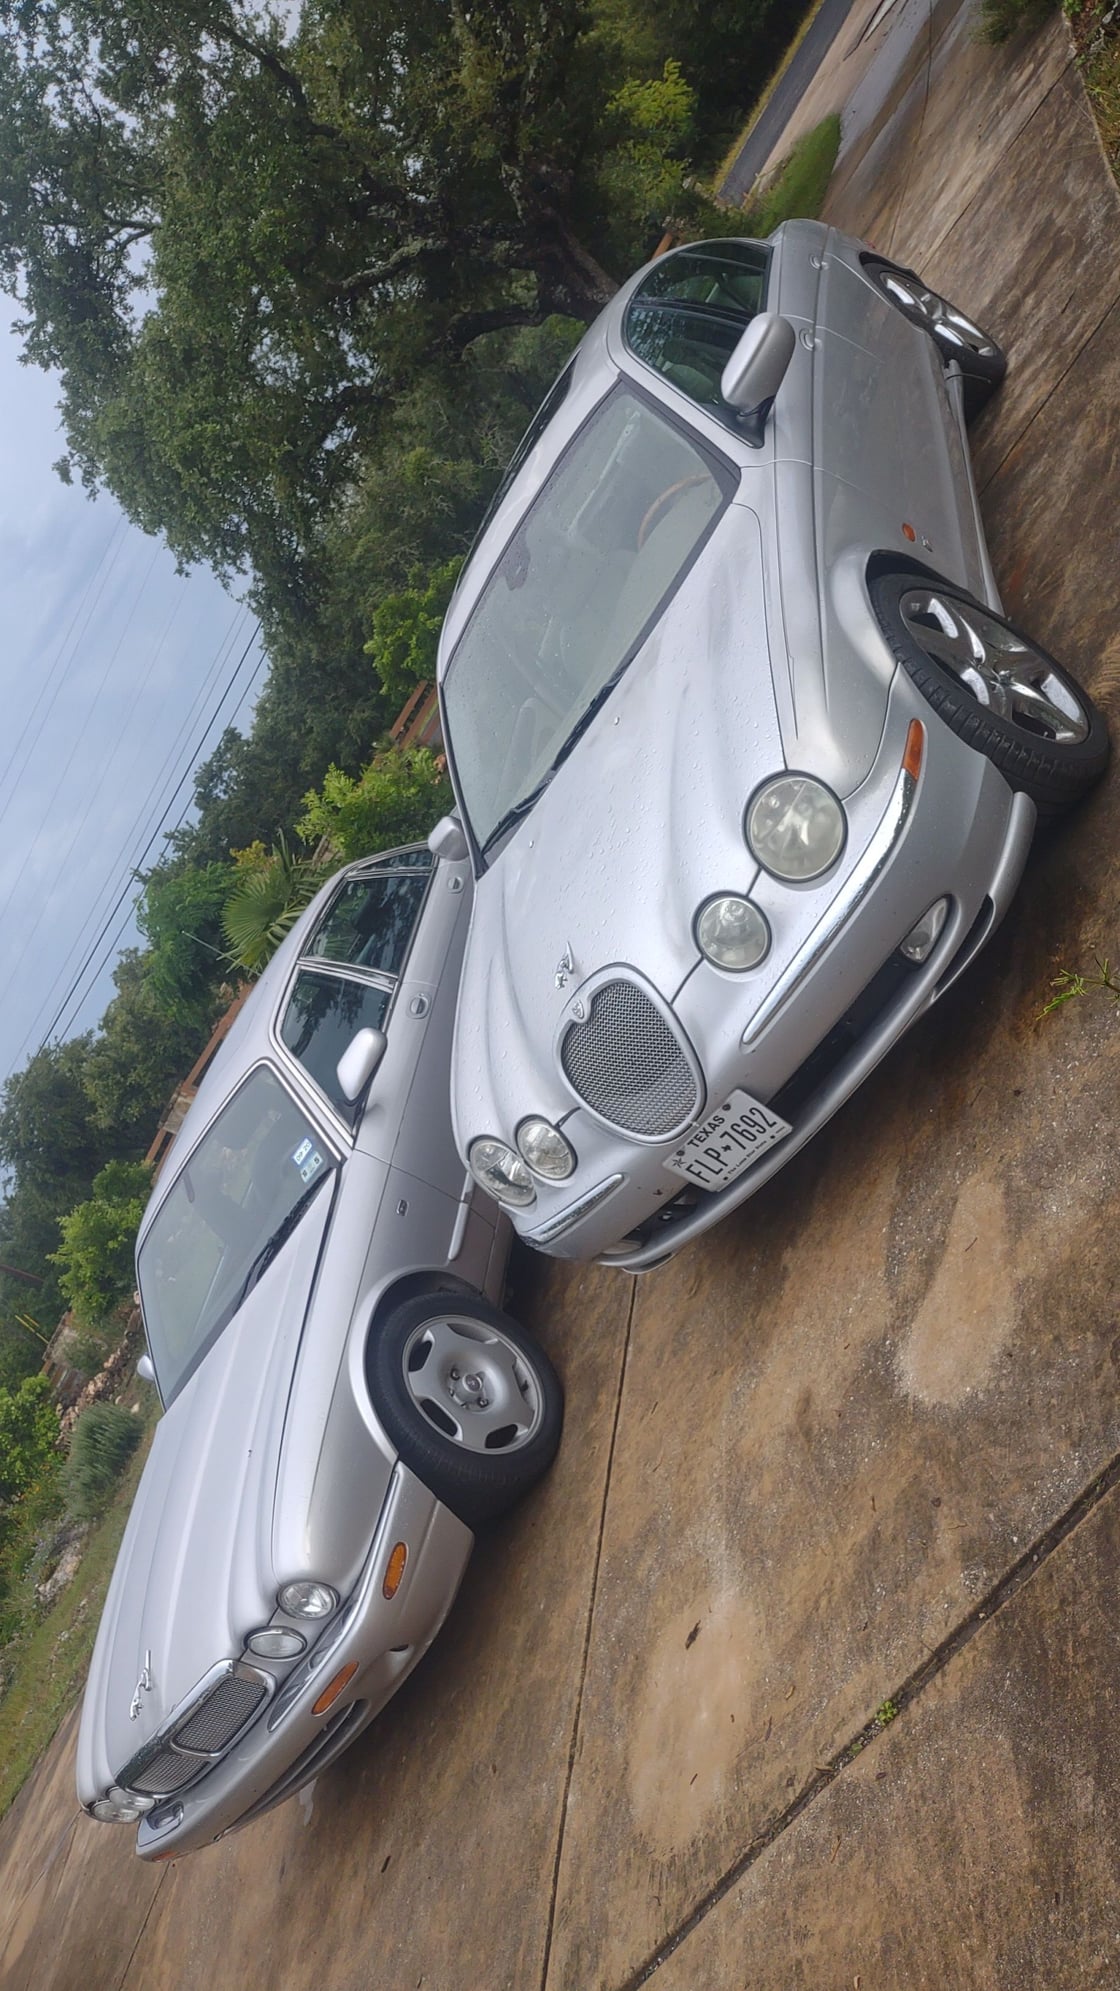 2001 Jaguar S-Type - 2001 jaguar s type 3.0 - Used - VIN SAJDA01N31FL97938 - 200,300 Miles - 6 cyl - 2WD - Automatic - Sedan - Silver - Boerne, TX 78015, United States